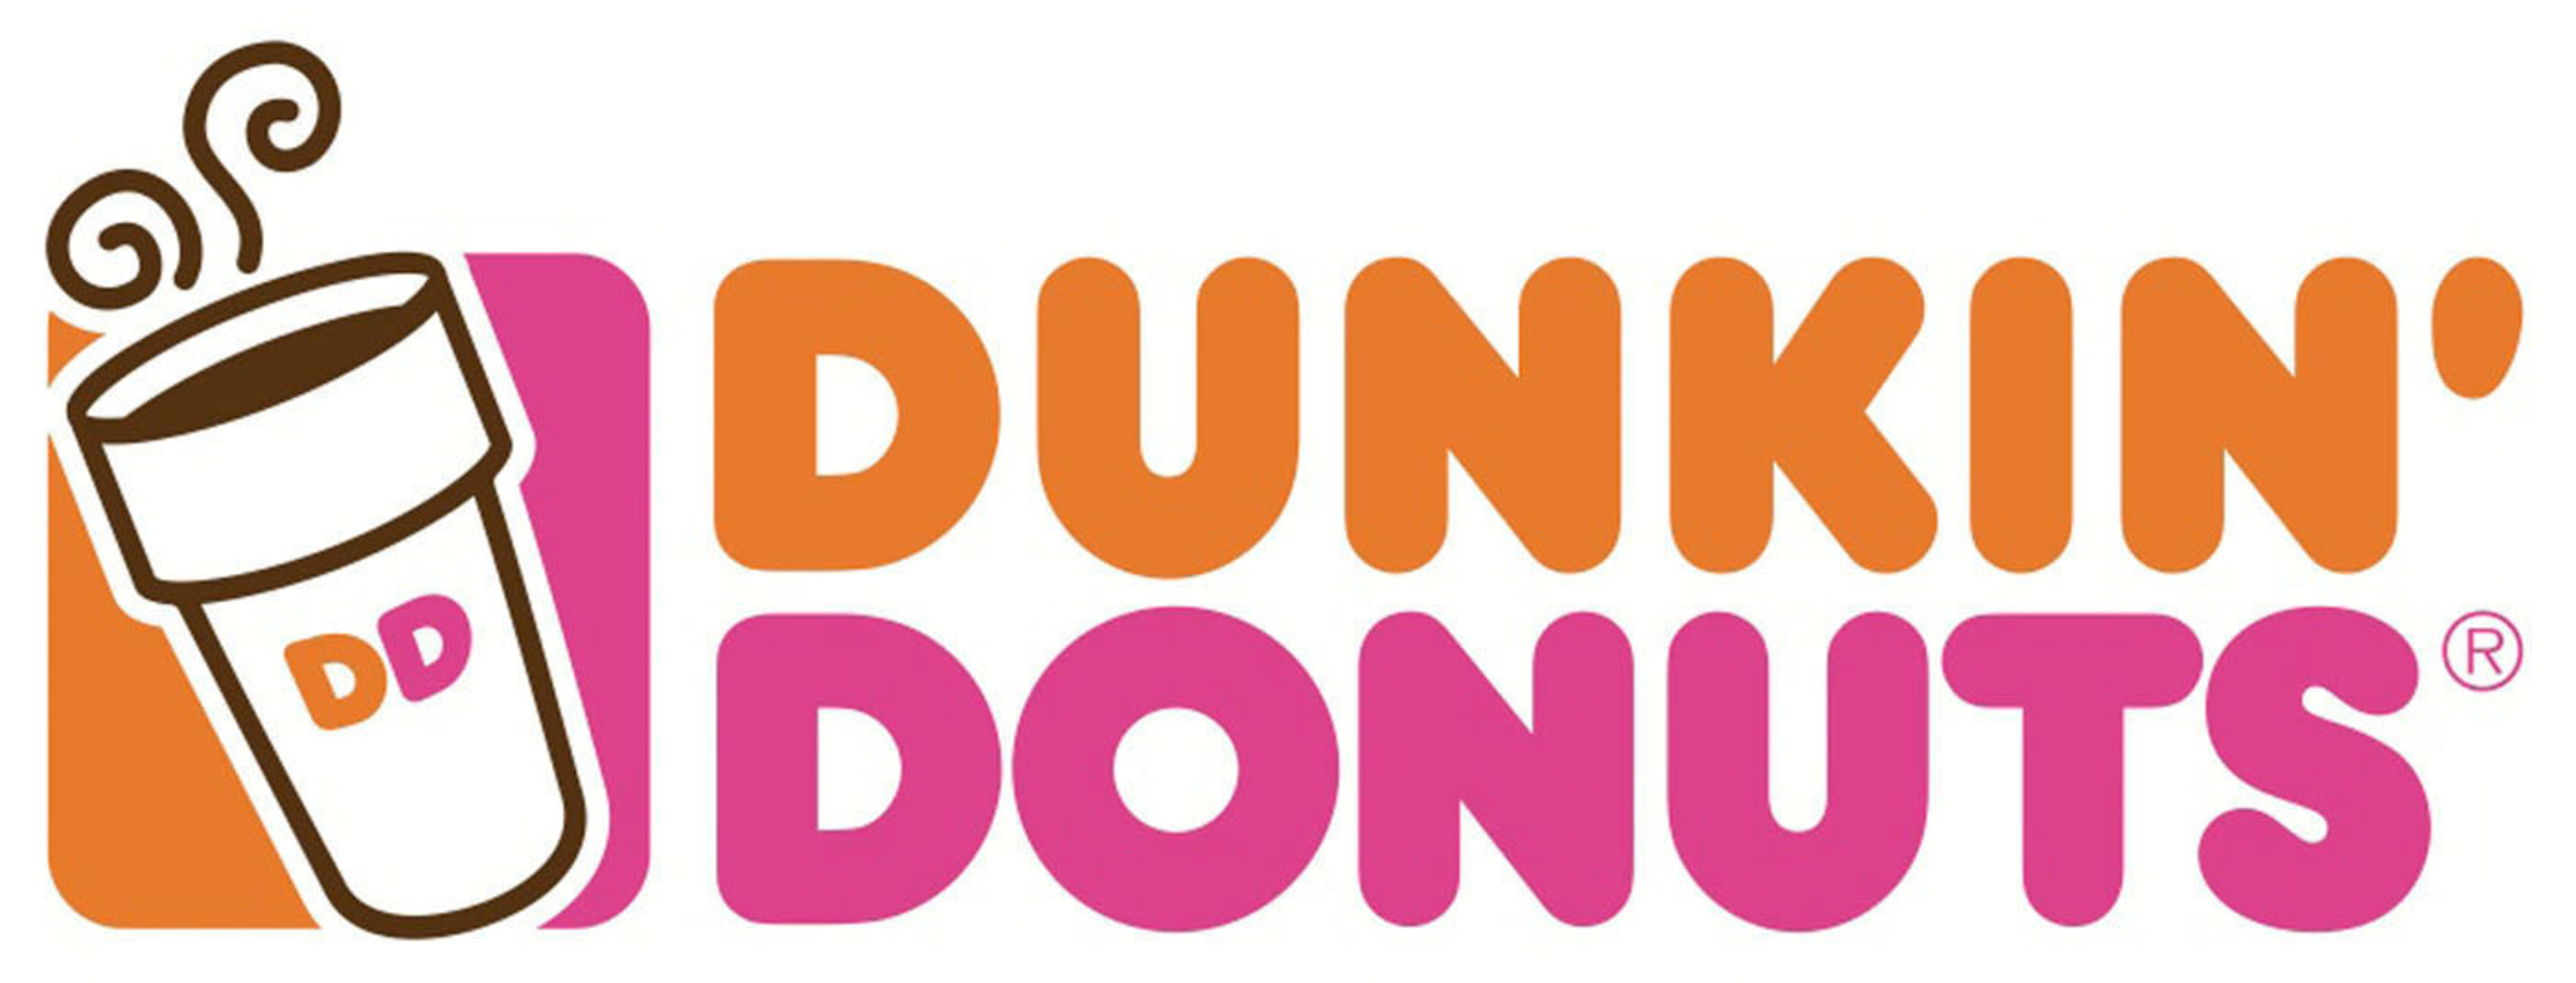 Dunkin' Donuts Logo. (PRNewsFoto/Dunkin' Donuts) (PRNewsFoto/DUNKIN' DONUTS)